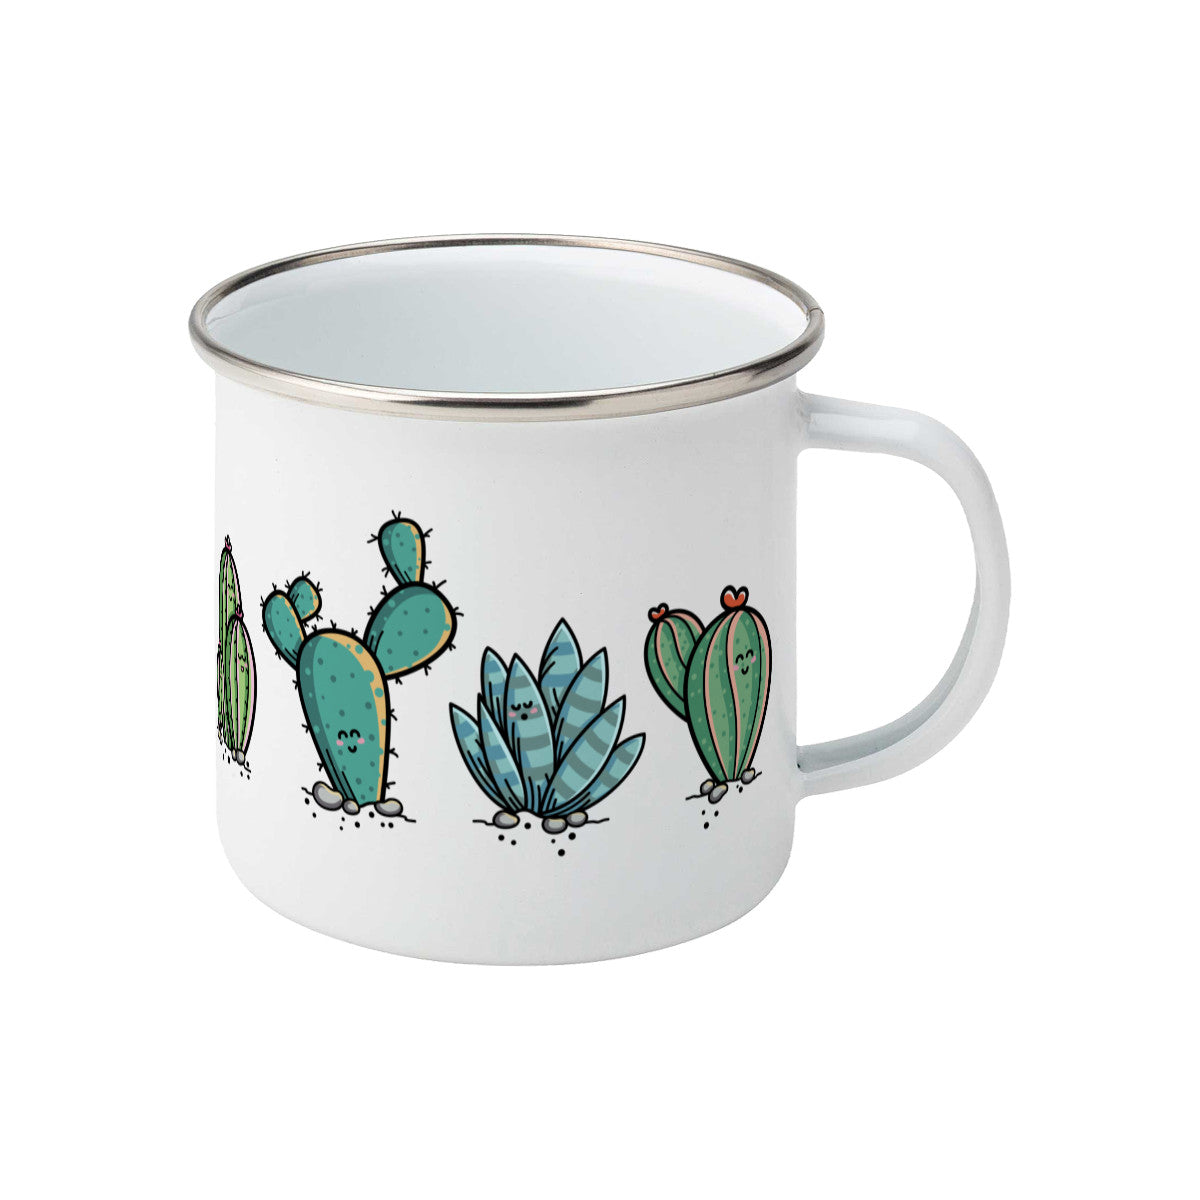 Four kawaii cute cactus plants design on a silver rimmed white enamel mug, showing RHS